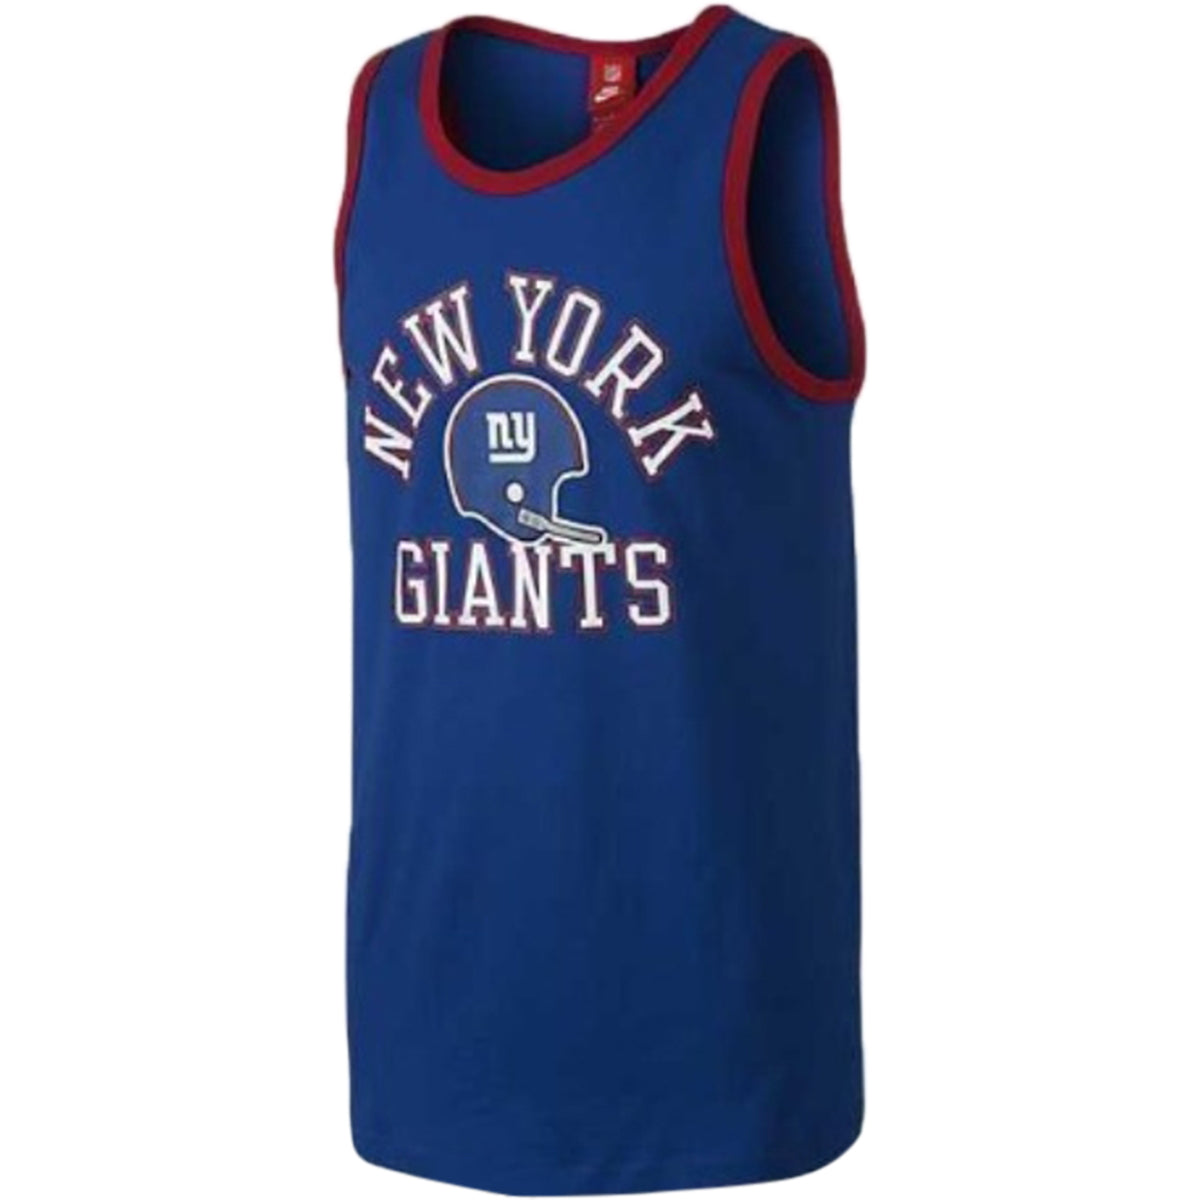 Nike Giants Tank Top Mens Style : 638242